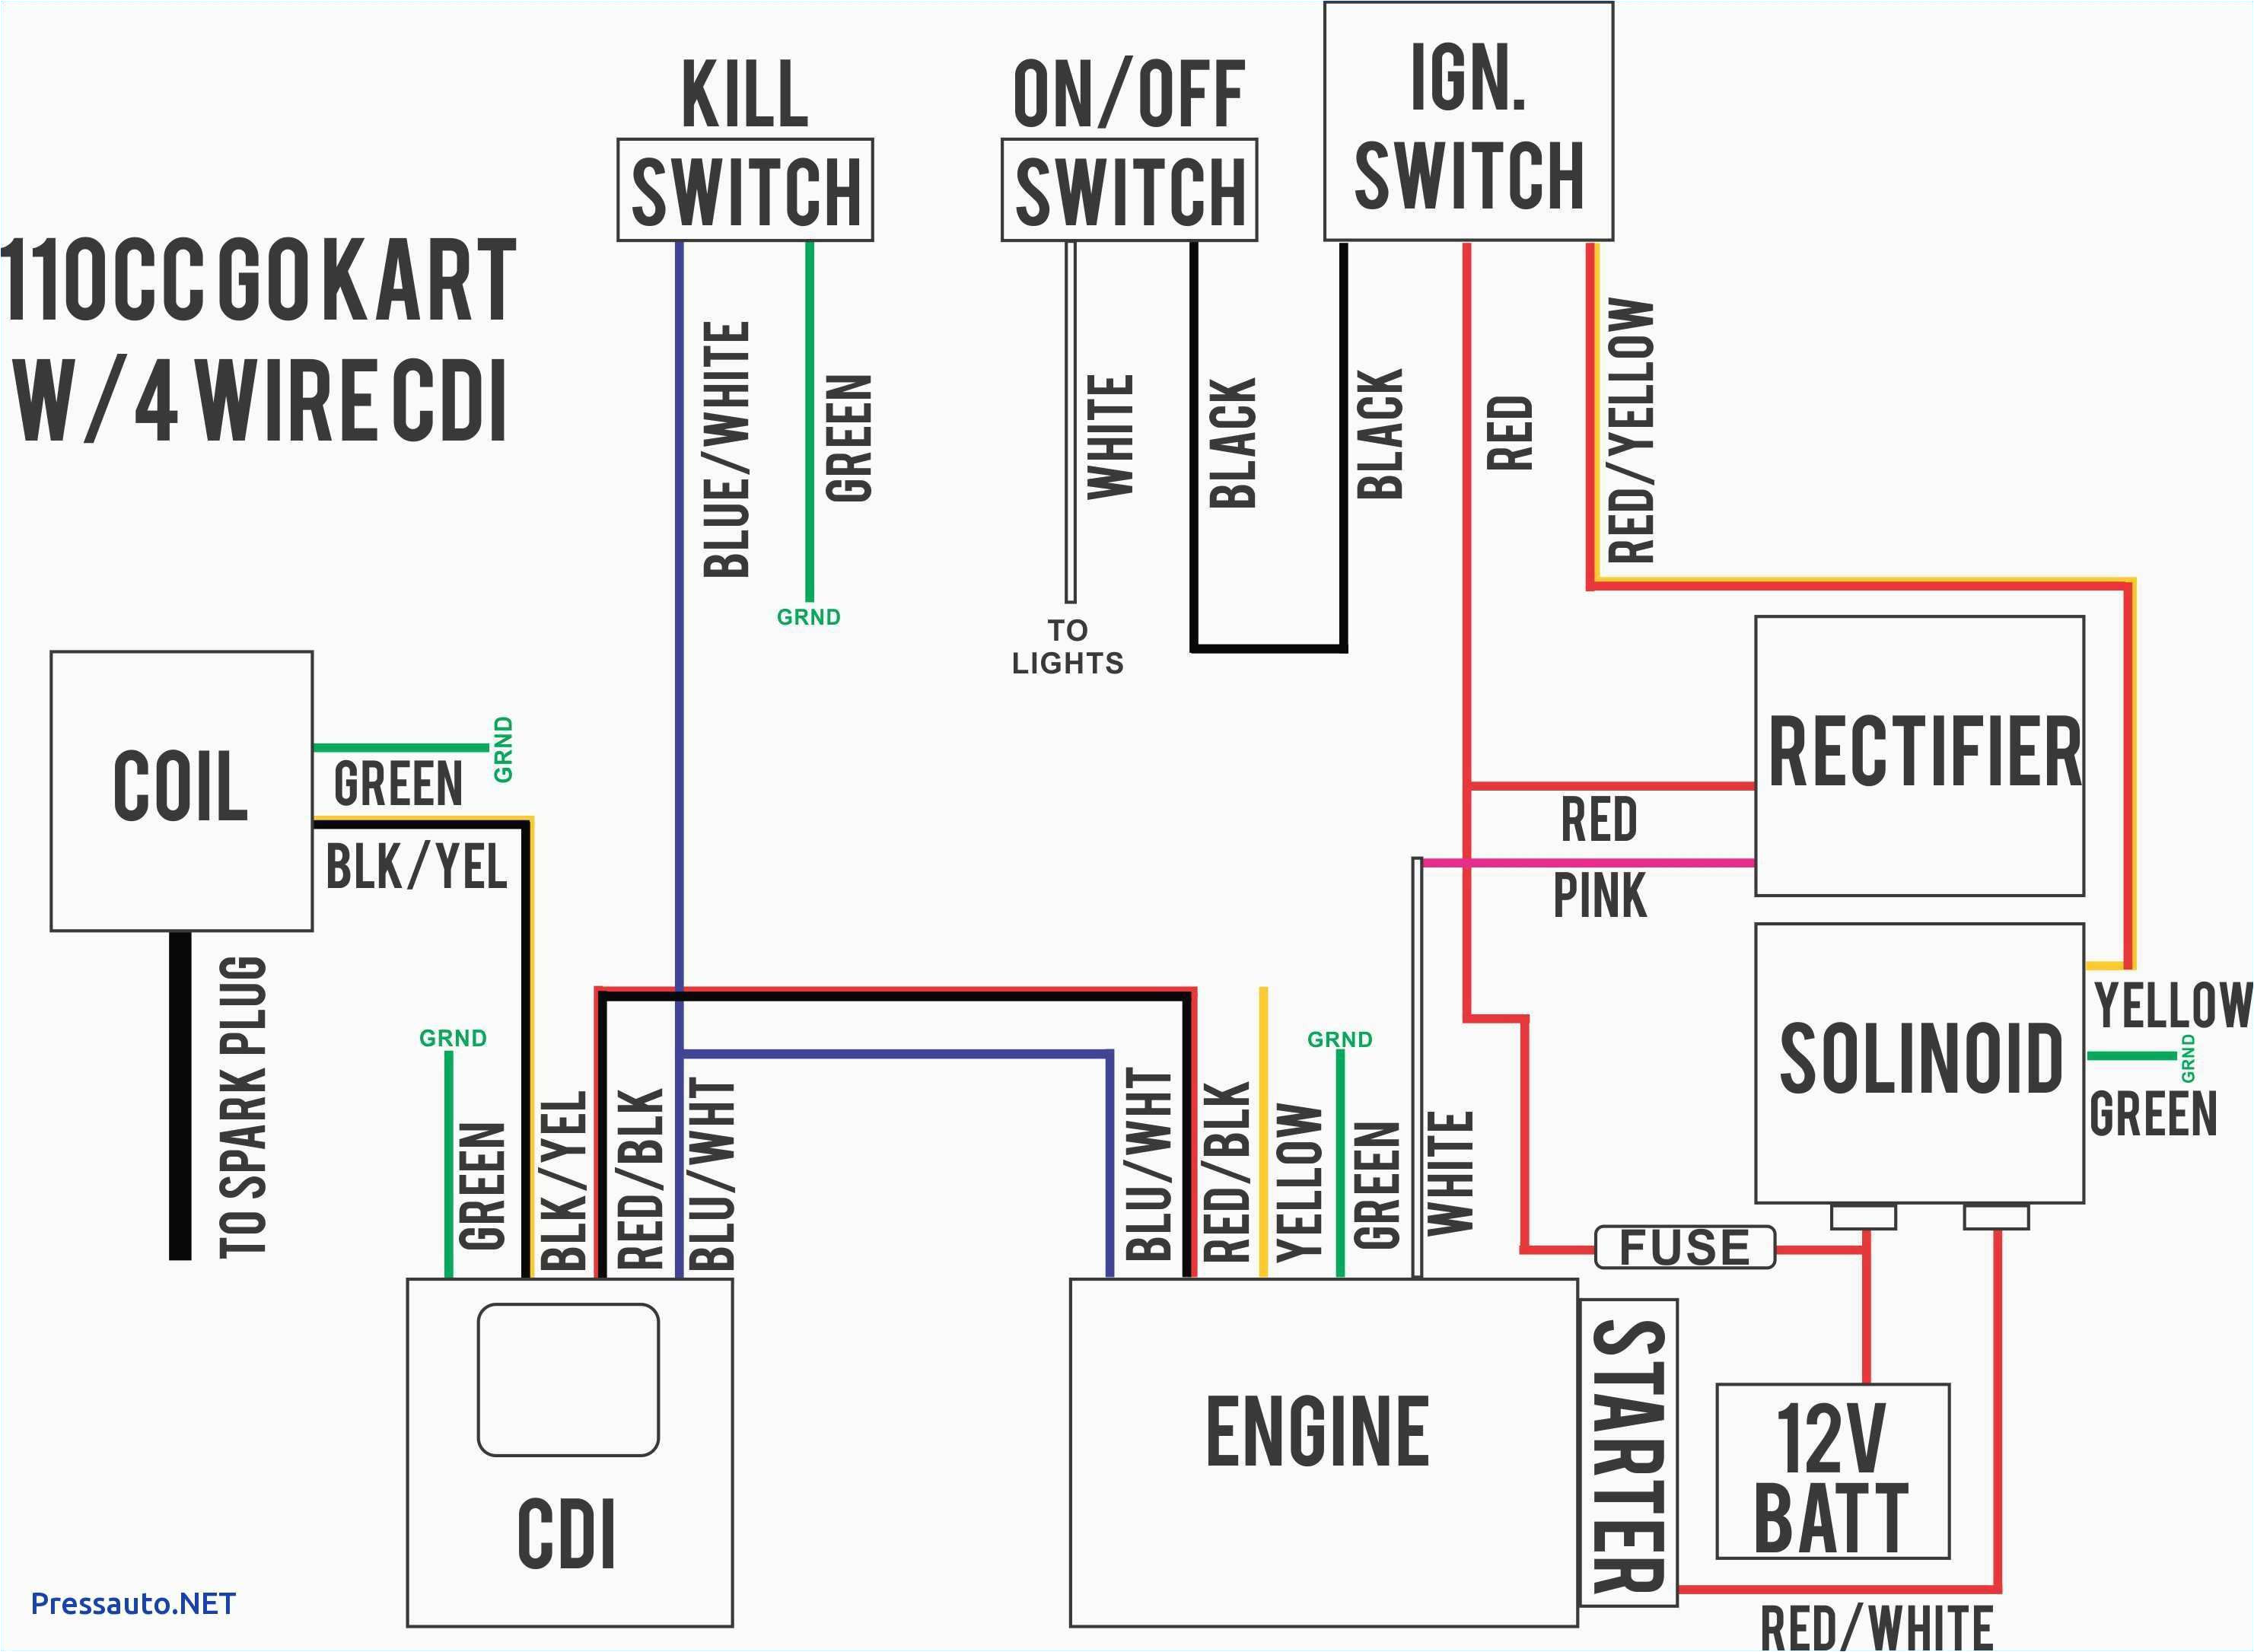 dei alarm wiring diagram wiring diagram mix 556u viper alarm cables diagram wiring diagram local556u viper